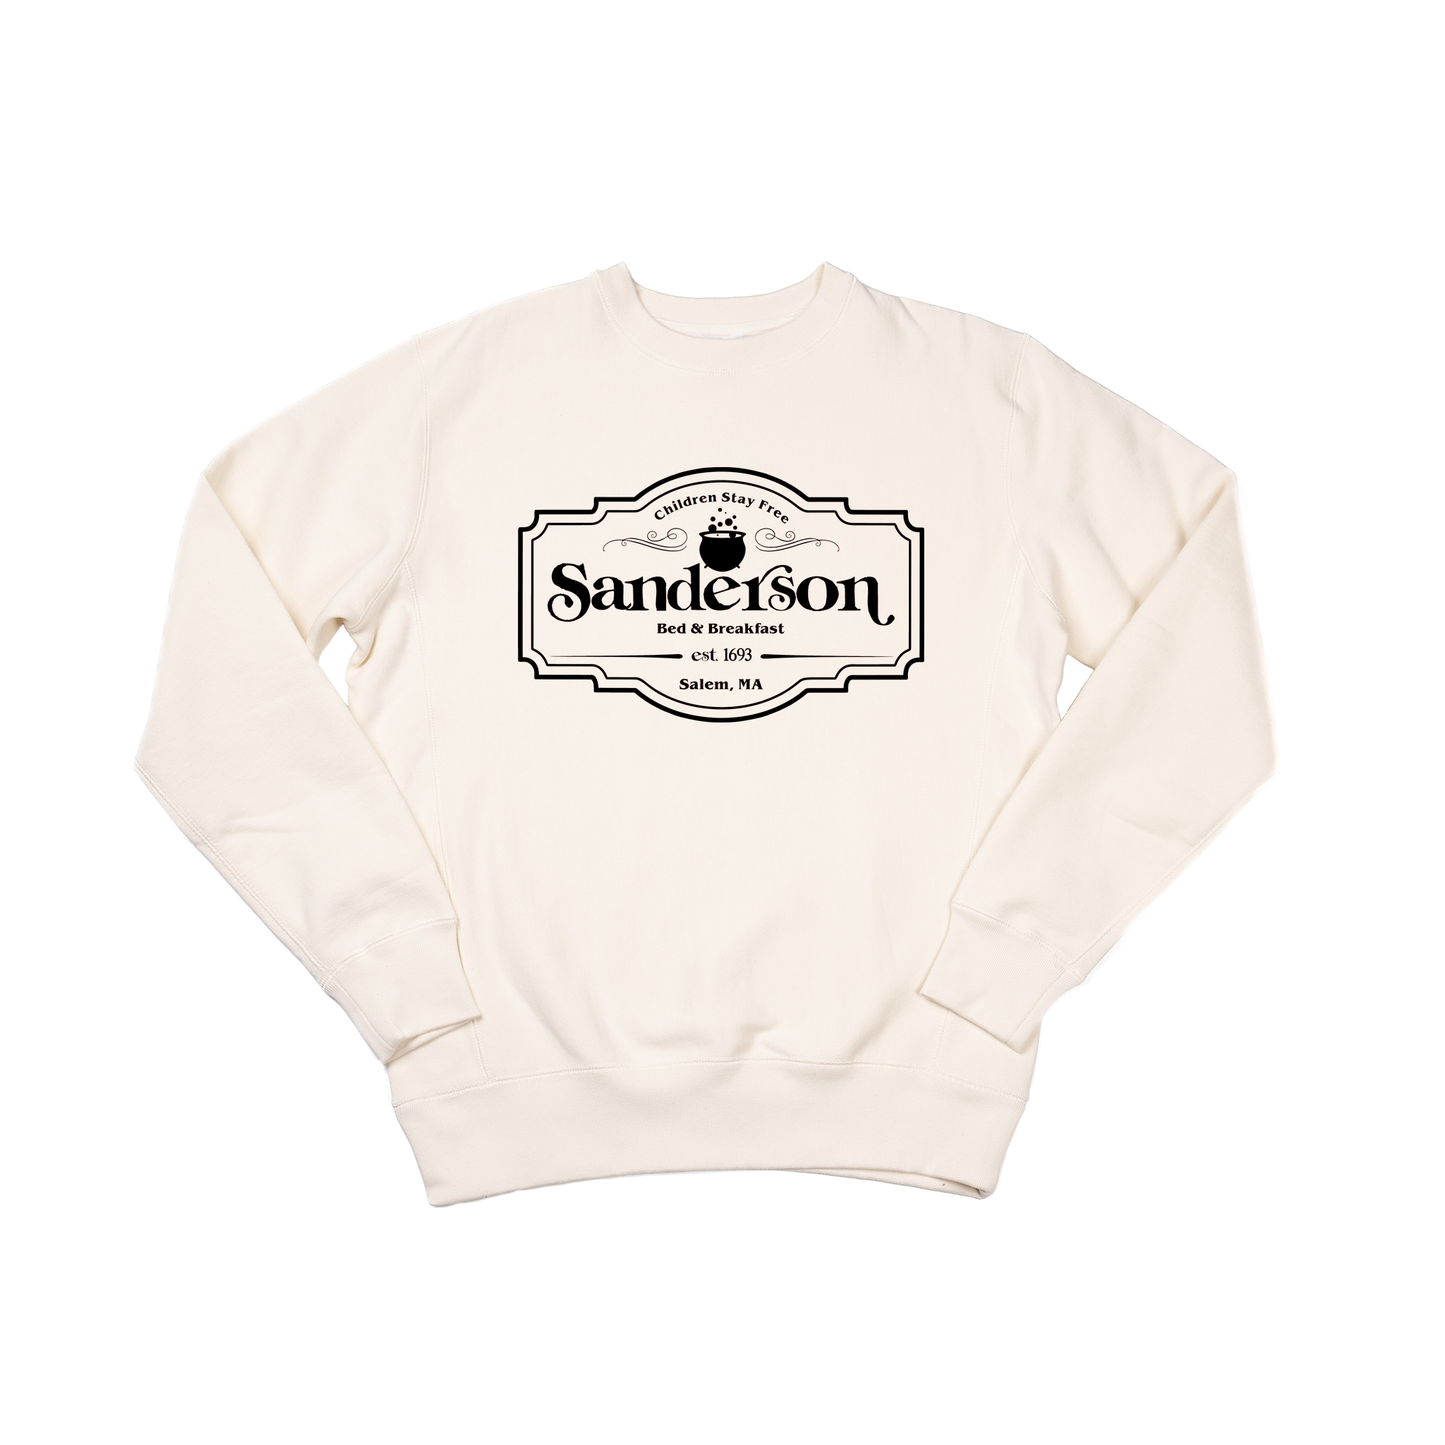 Sanderson Bed + Breakfast (Black) - Heavyweight Sweatshirt (Natural)